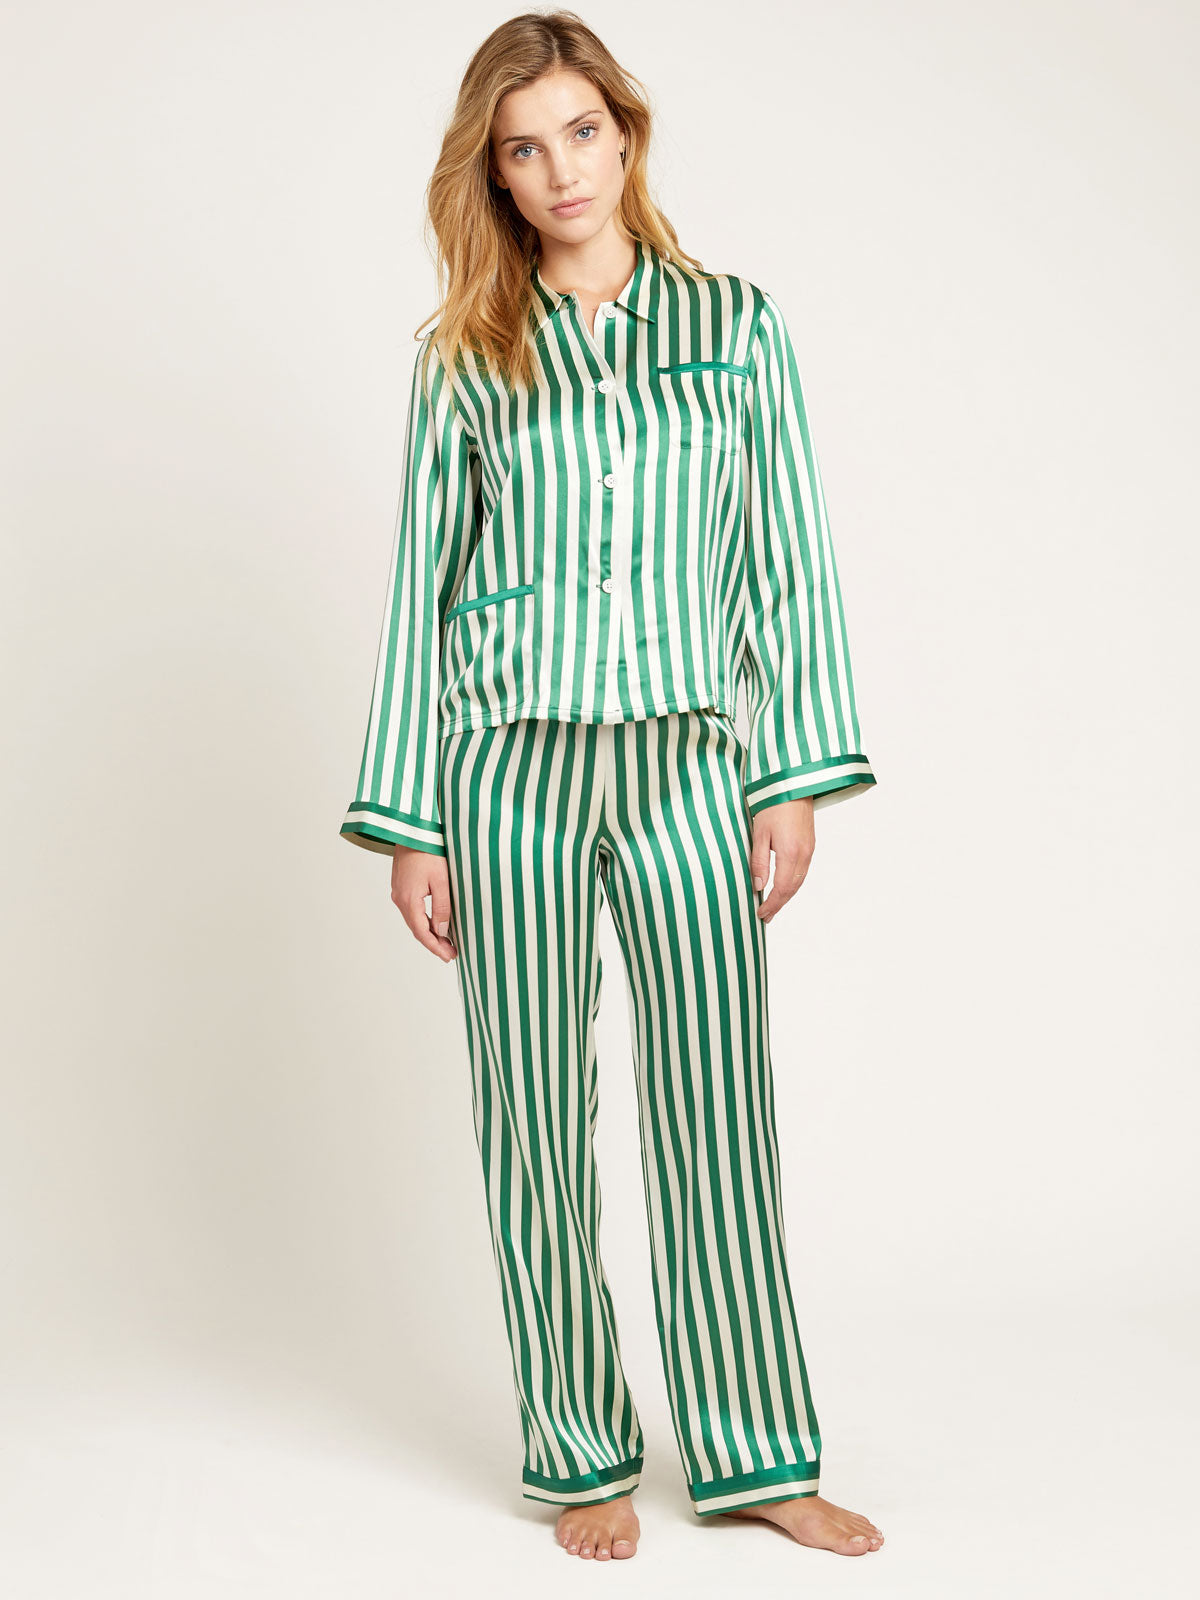 Ruthie Top in Emerald | Ready-to-Wear Designer Silk Pajama Top